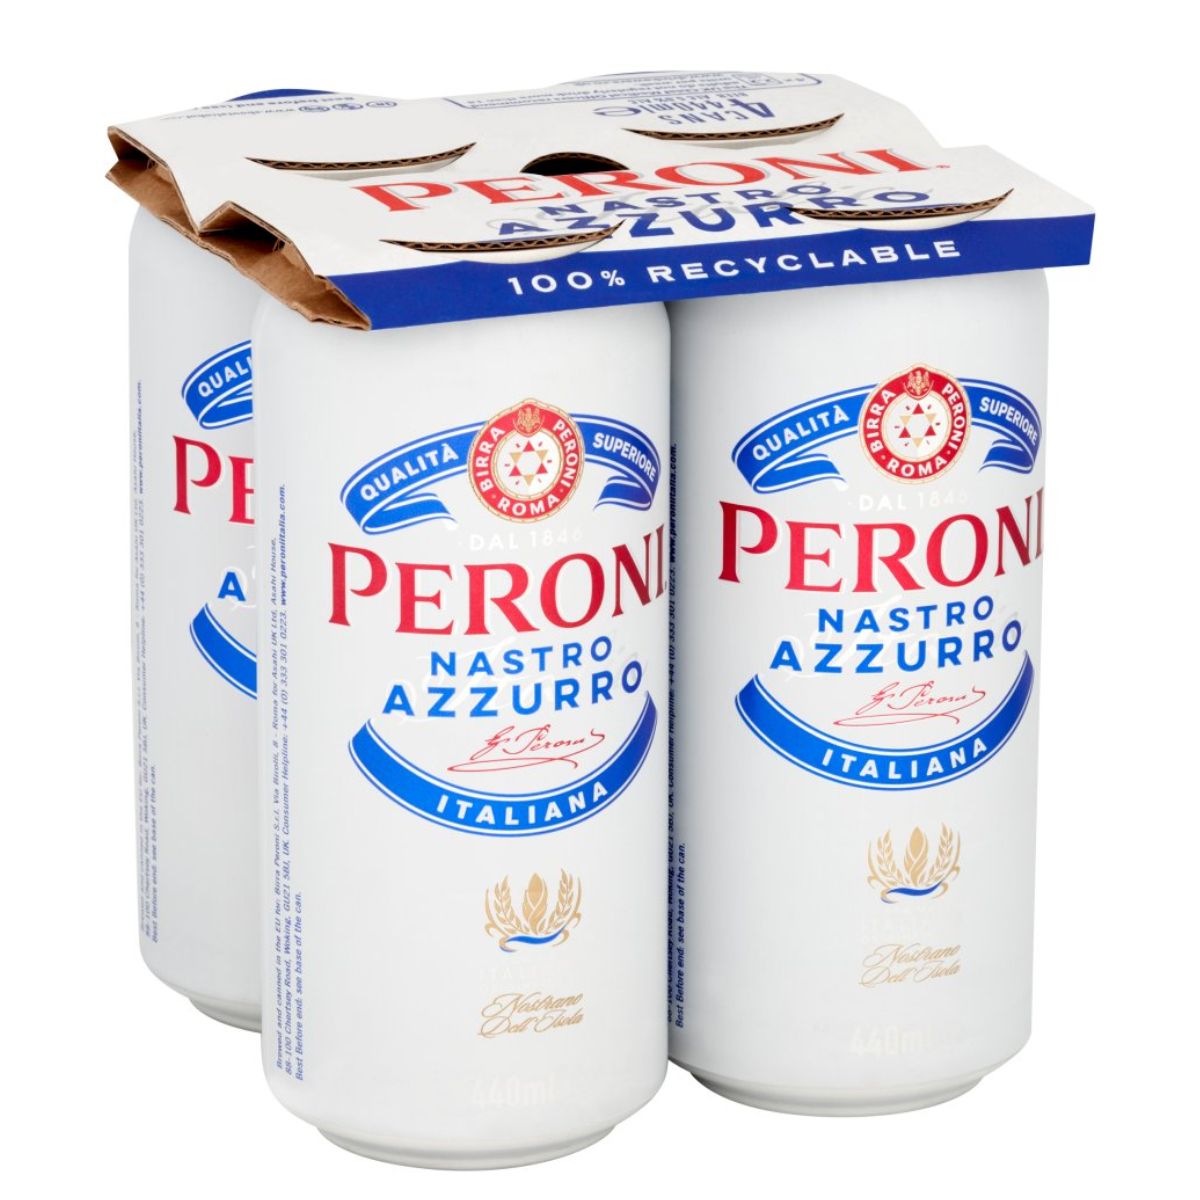 Three cans of Peroni - Nastro Azzurro (5.0% ABV) - 4 x 440ml on a white background.